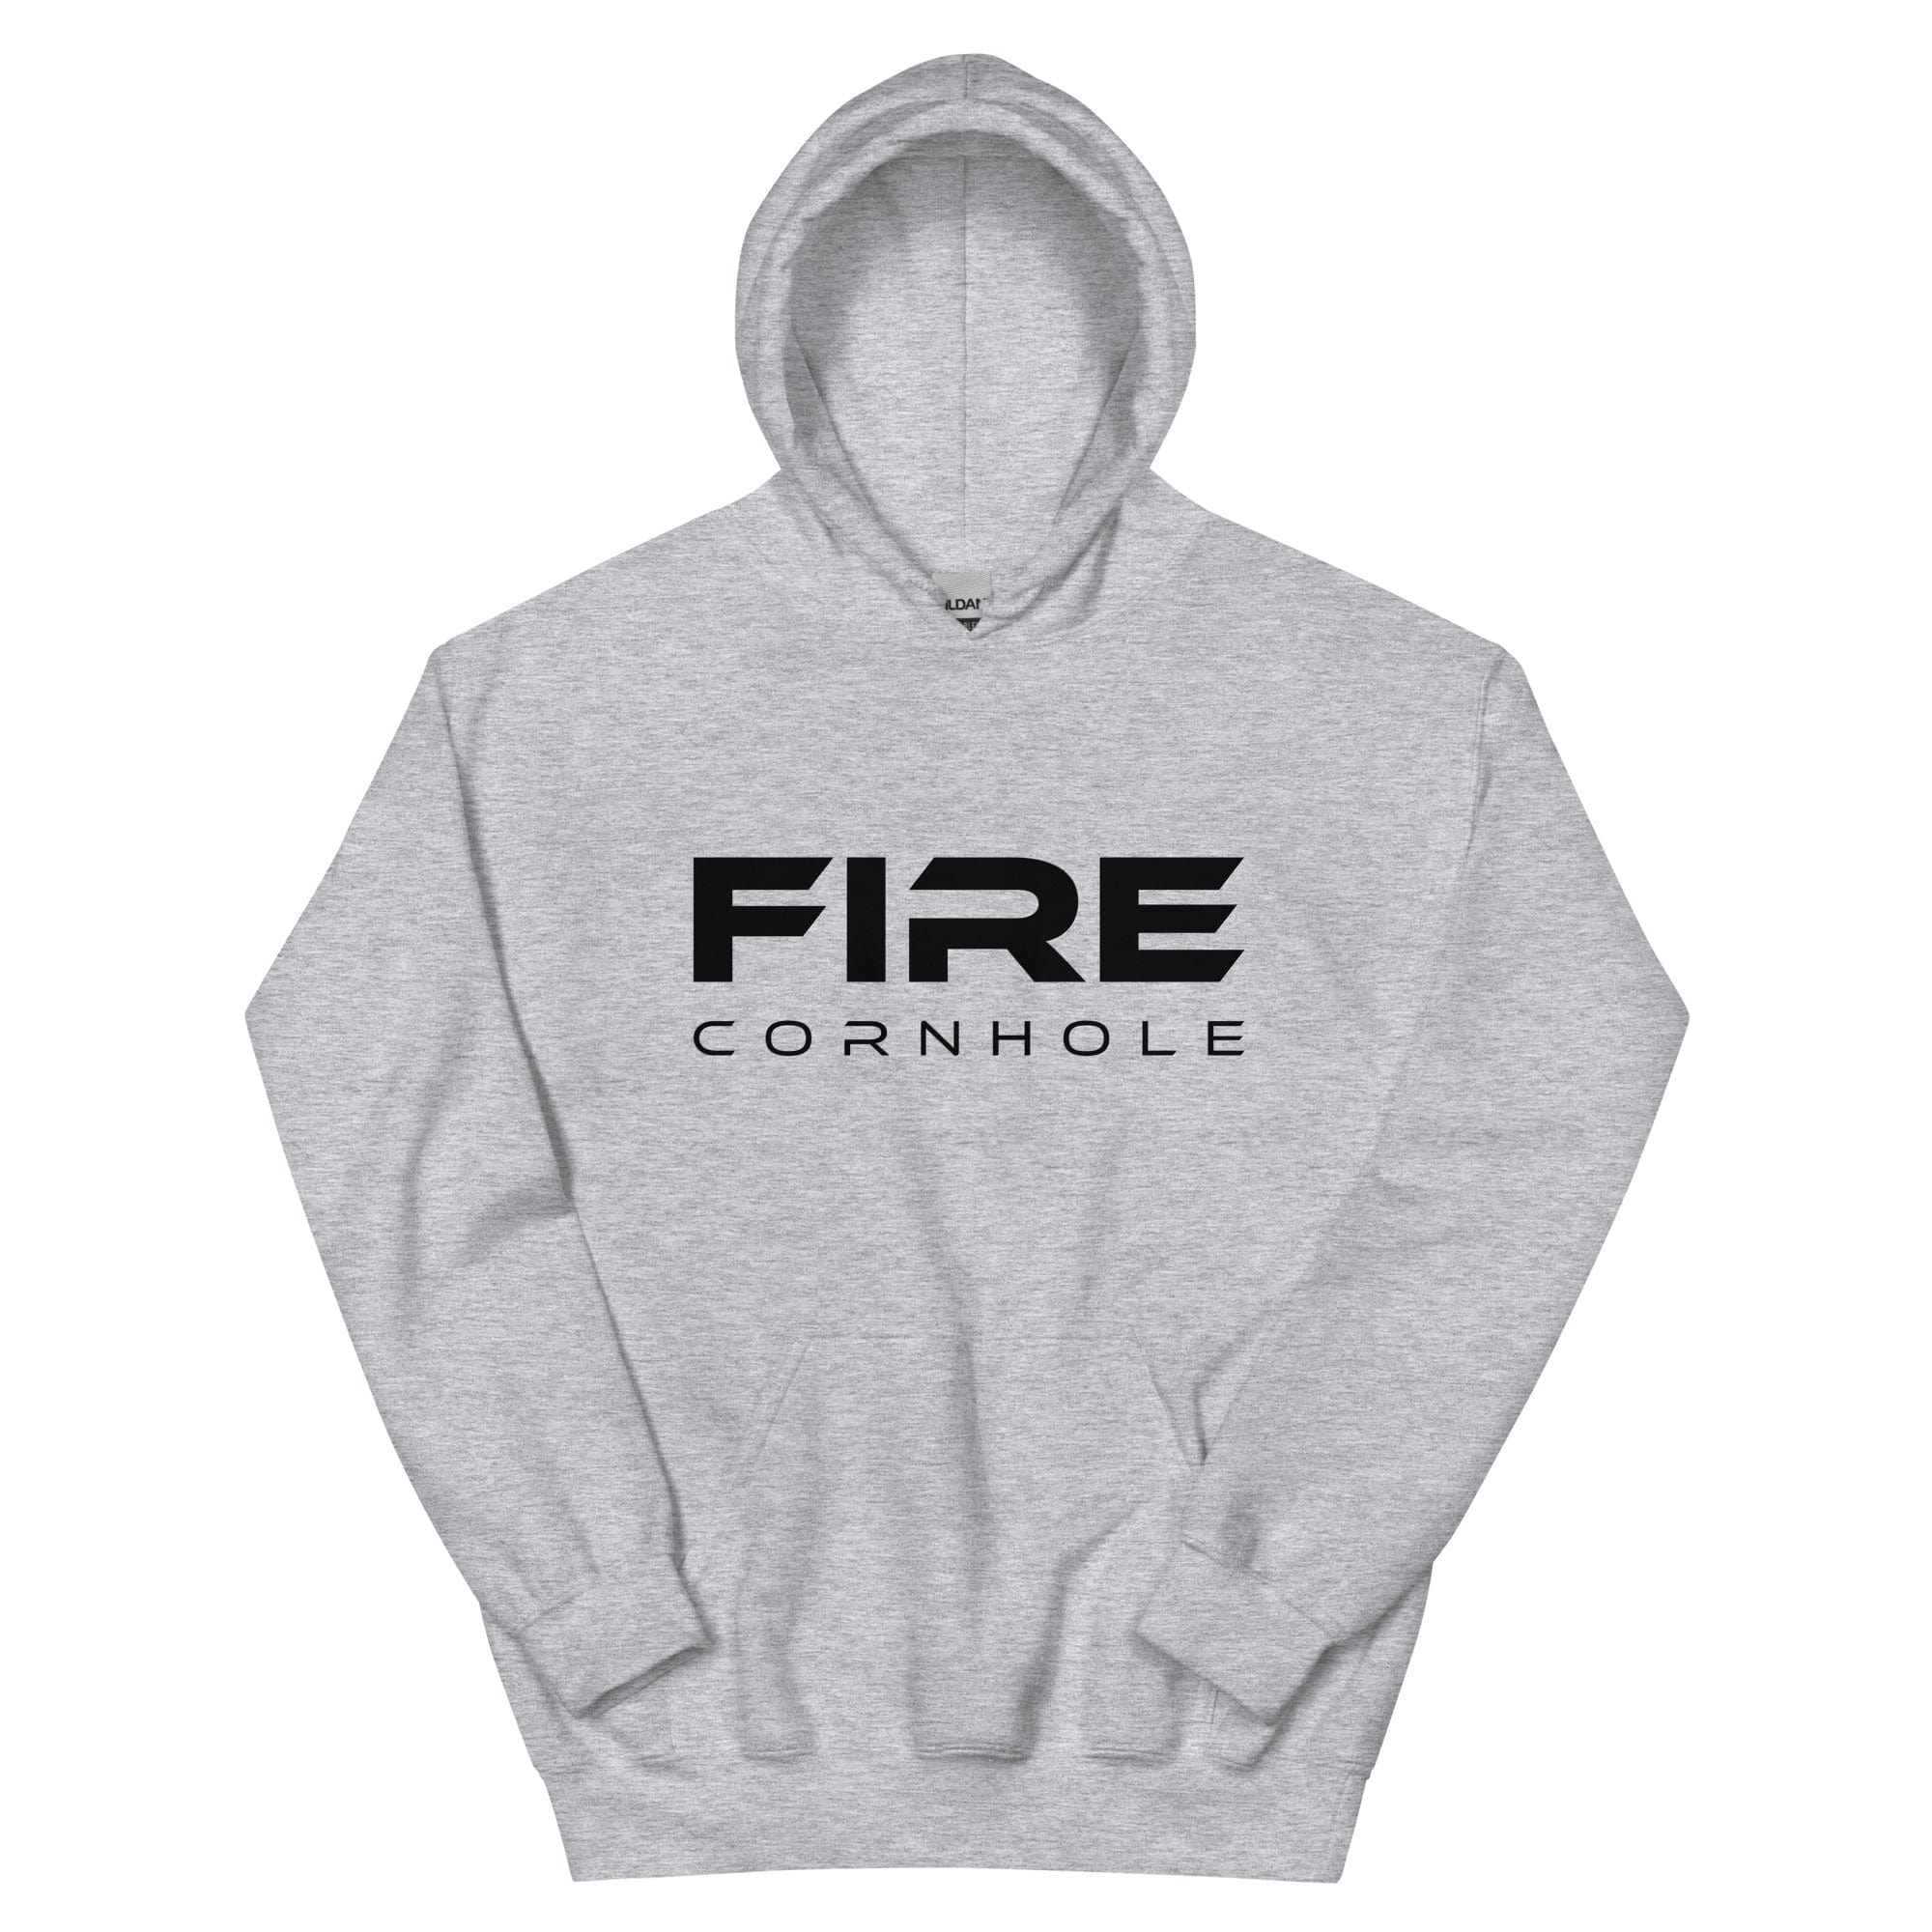 Heathered grey unisex cotton hoodie with Fire Cornhole logo in black